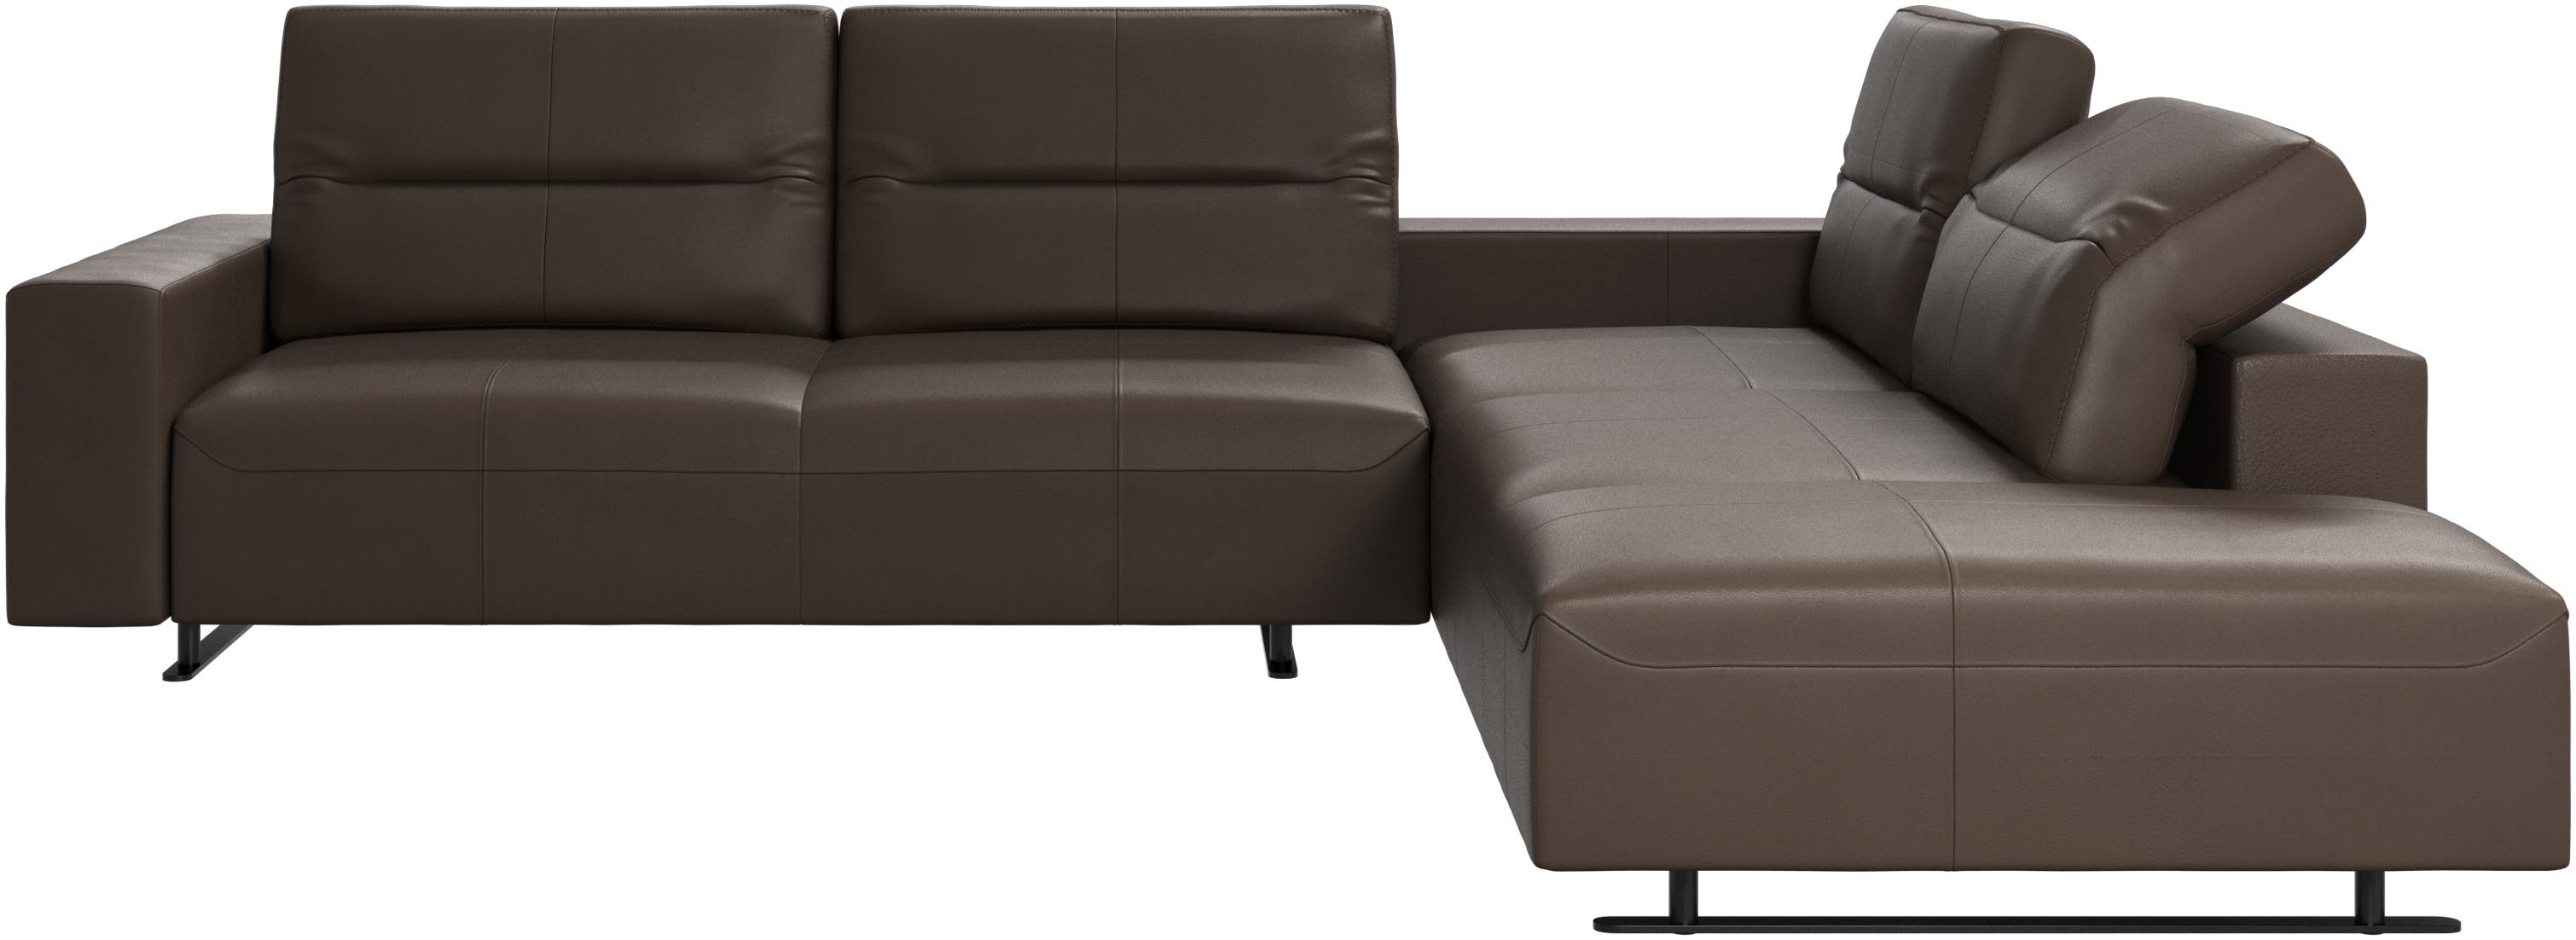 Hampton corner sofa with adjustable back and storage on left side